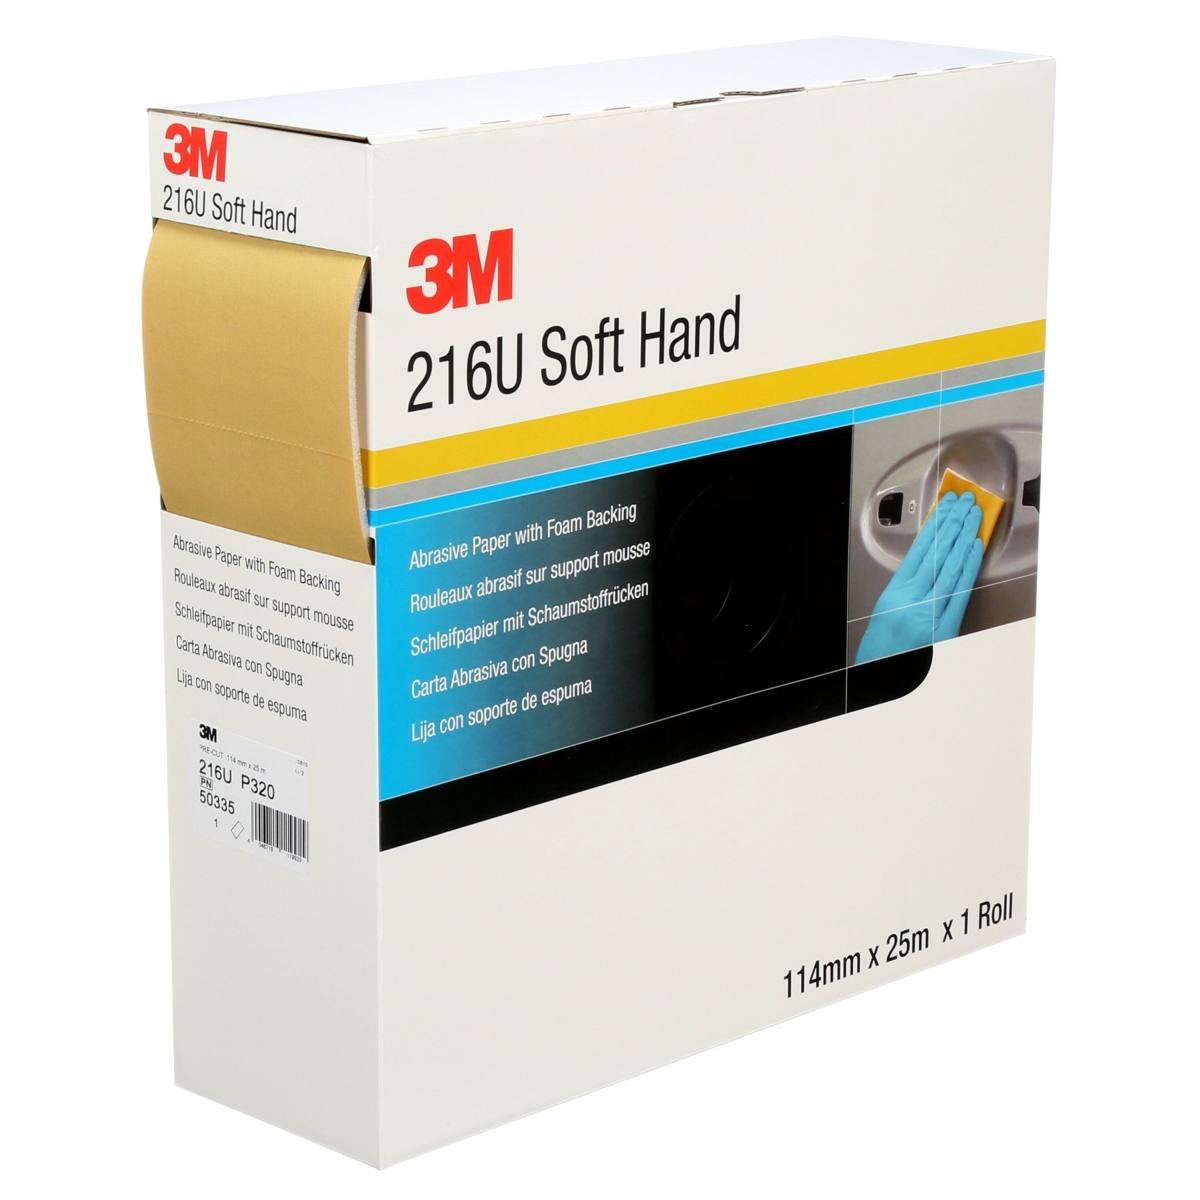 3M Soft Hand Sheet 216U, Gold, 114 mm x 135 m, P600